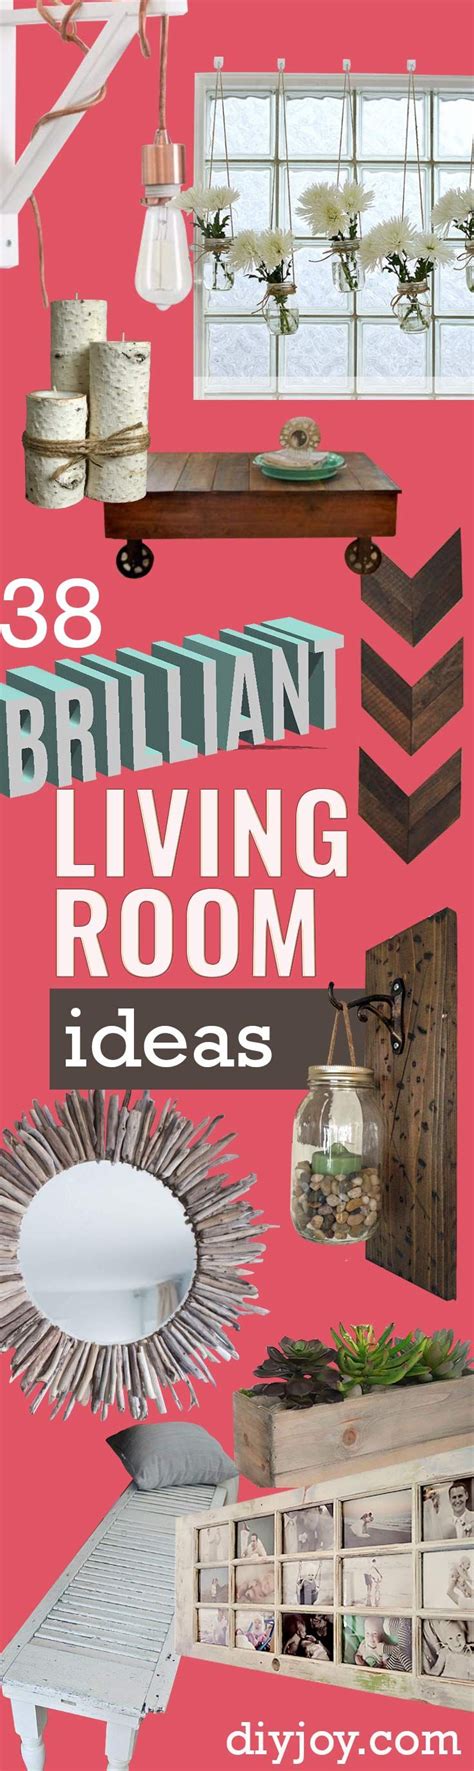 38 Diy Living Room Decor Ideas Diy Living Room Decor Diy Decor Diy